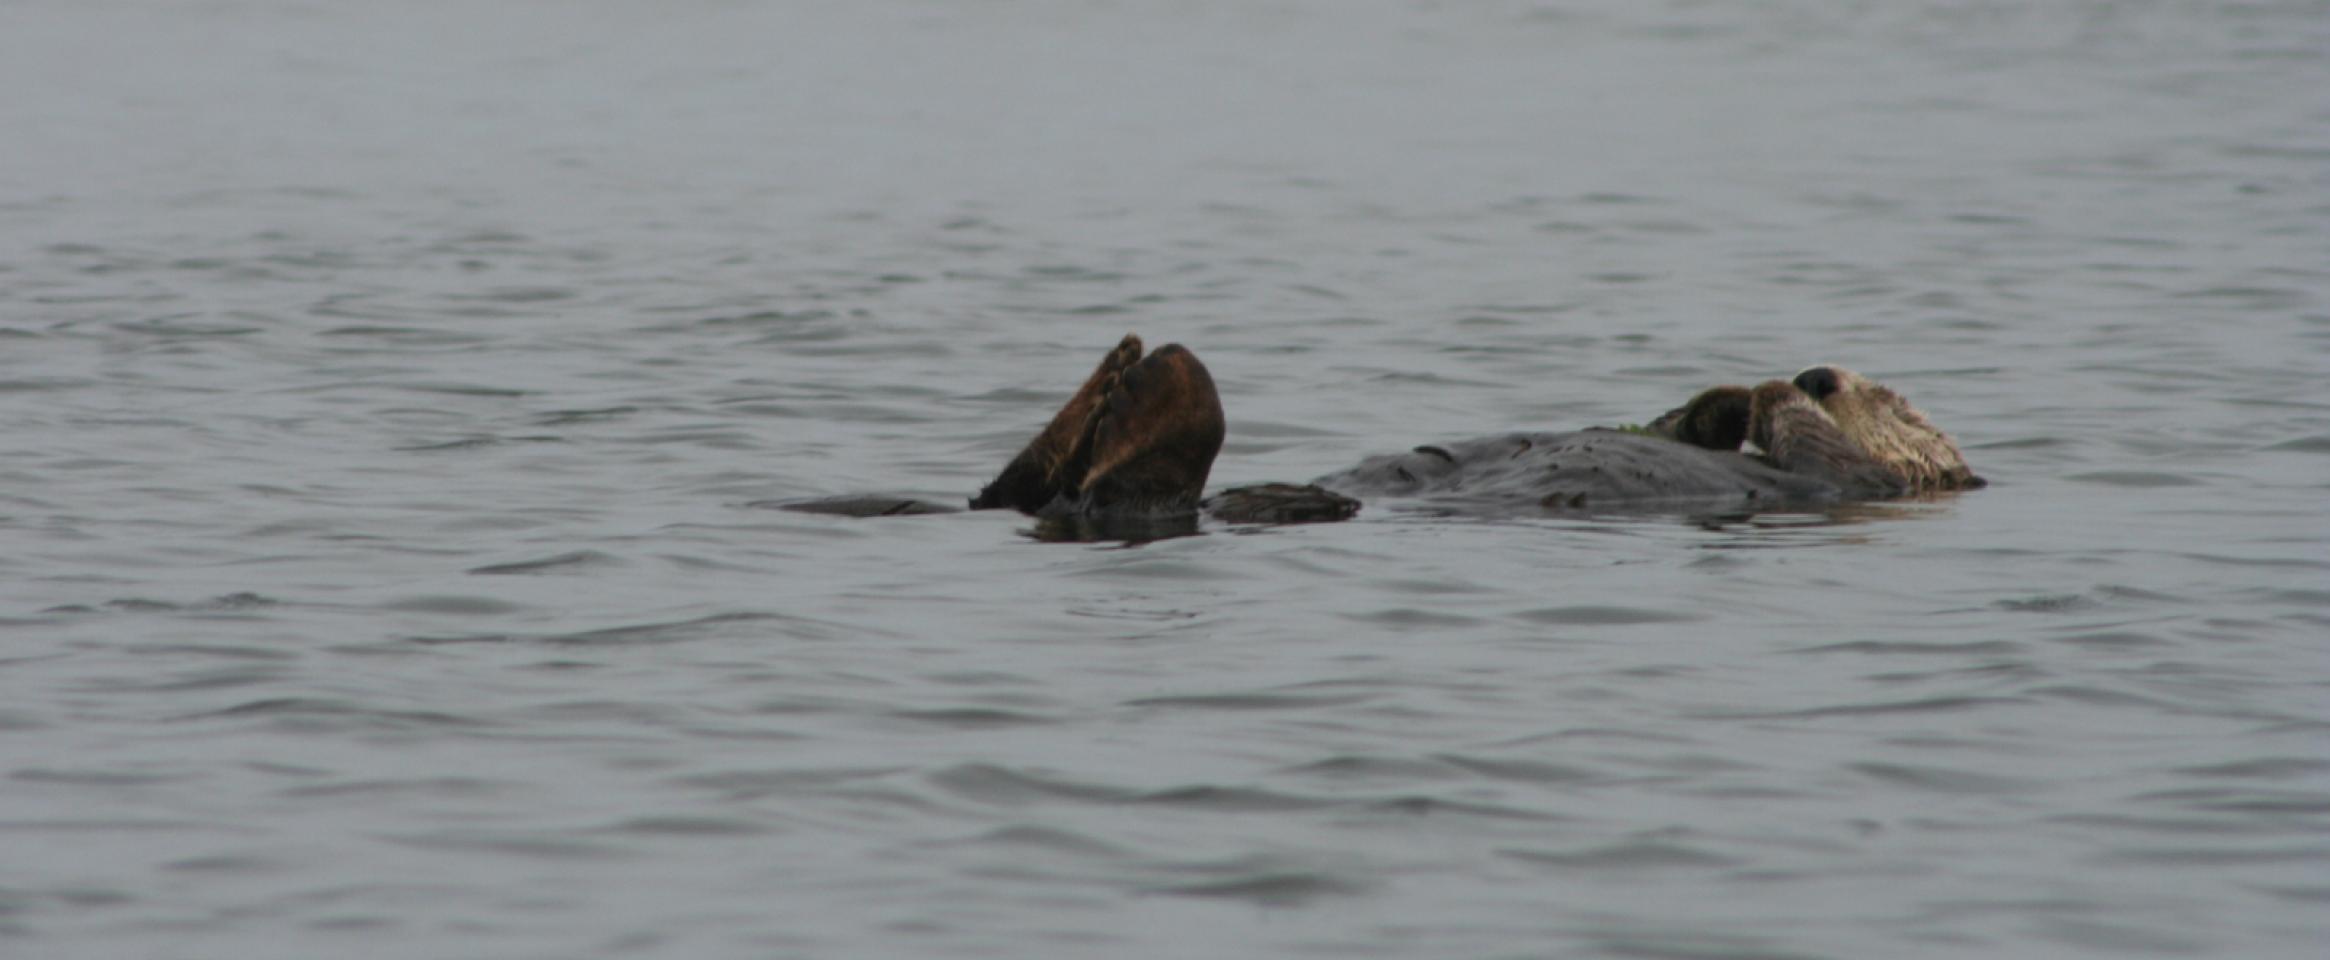 Rectangular photo of sea otter in the ocean. Photo credit: Jeff Stevens